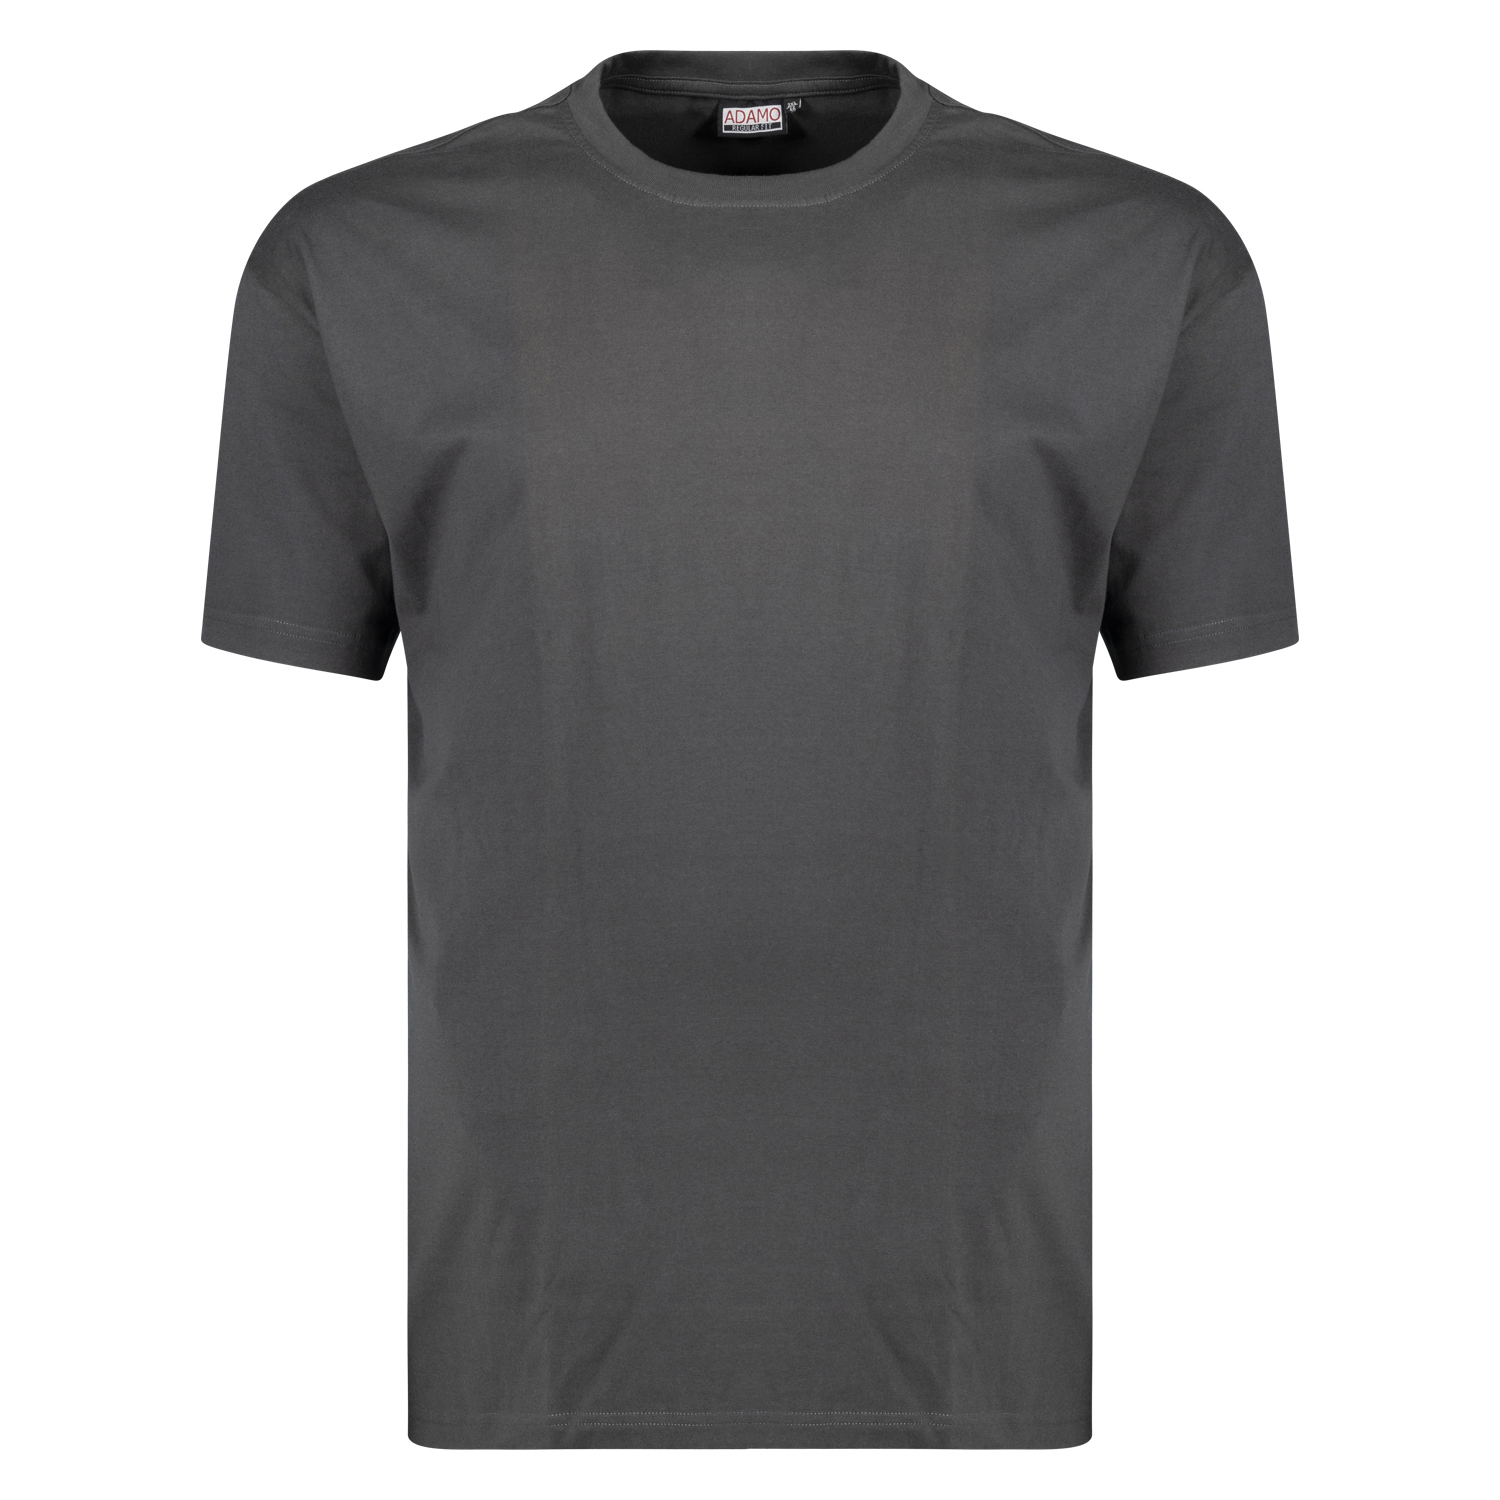 T-shirt Regular Fit anthracite série Bud by ADAMO jusqu'à la grande taille 12XL - Heavy Jersey